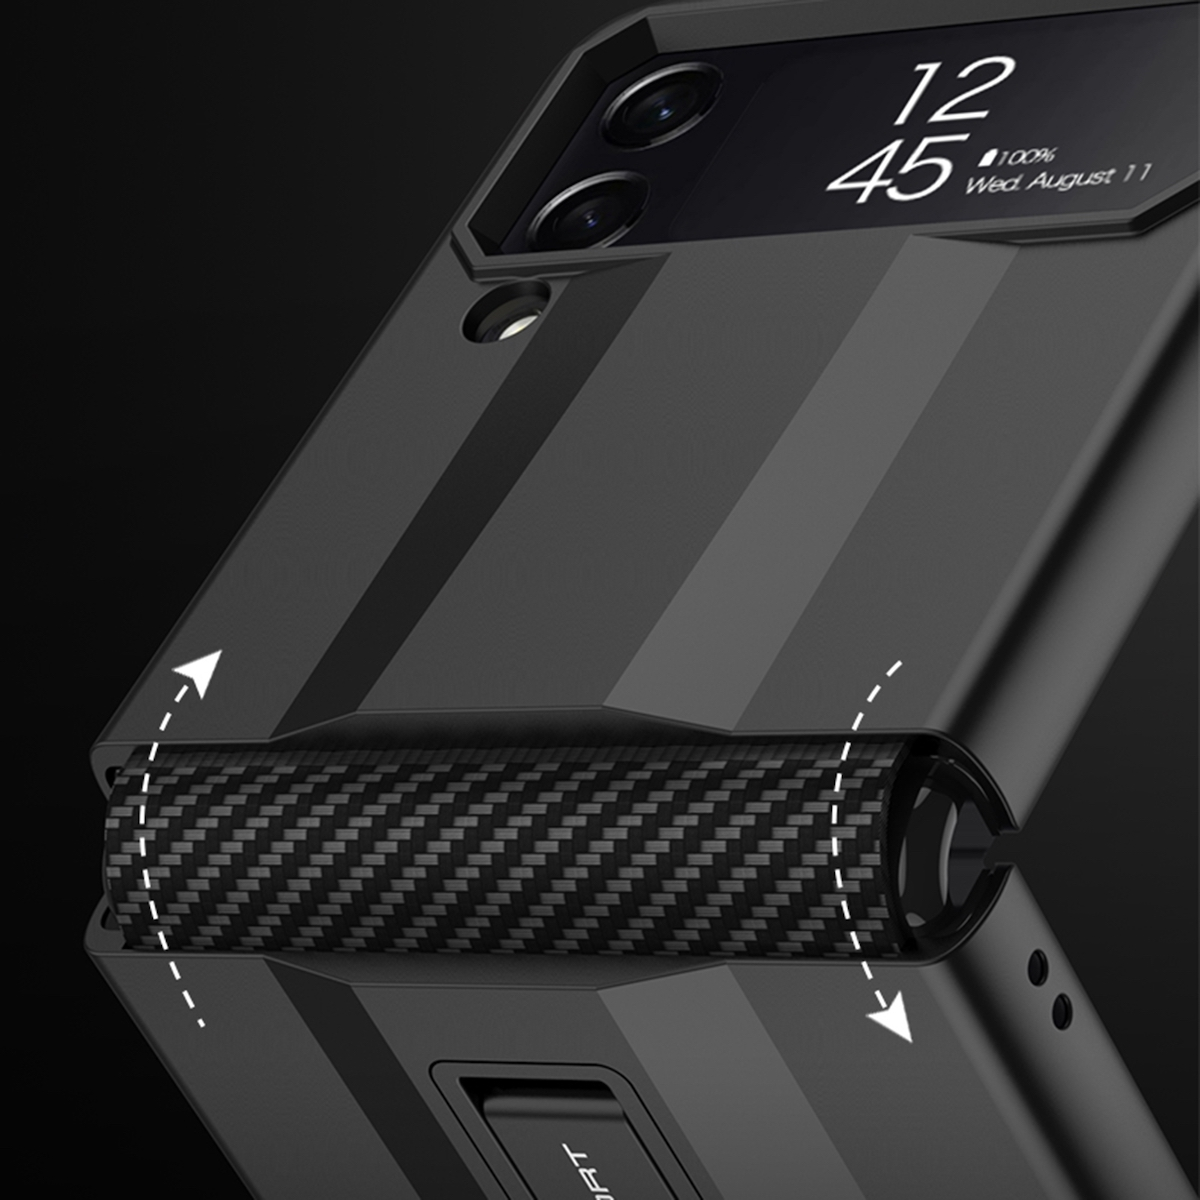 WIGENTO All-Inclusive 5G, Z Flip4 Hülle, Kunststoff Samsung, Galaxy H-Grün Backcover